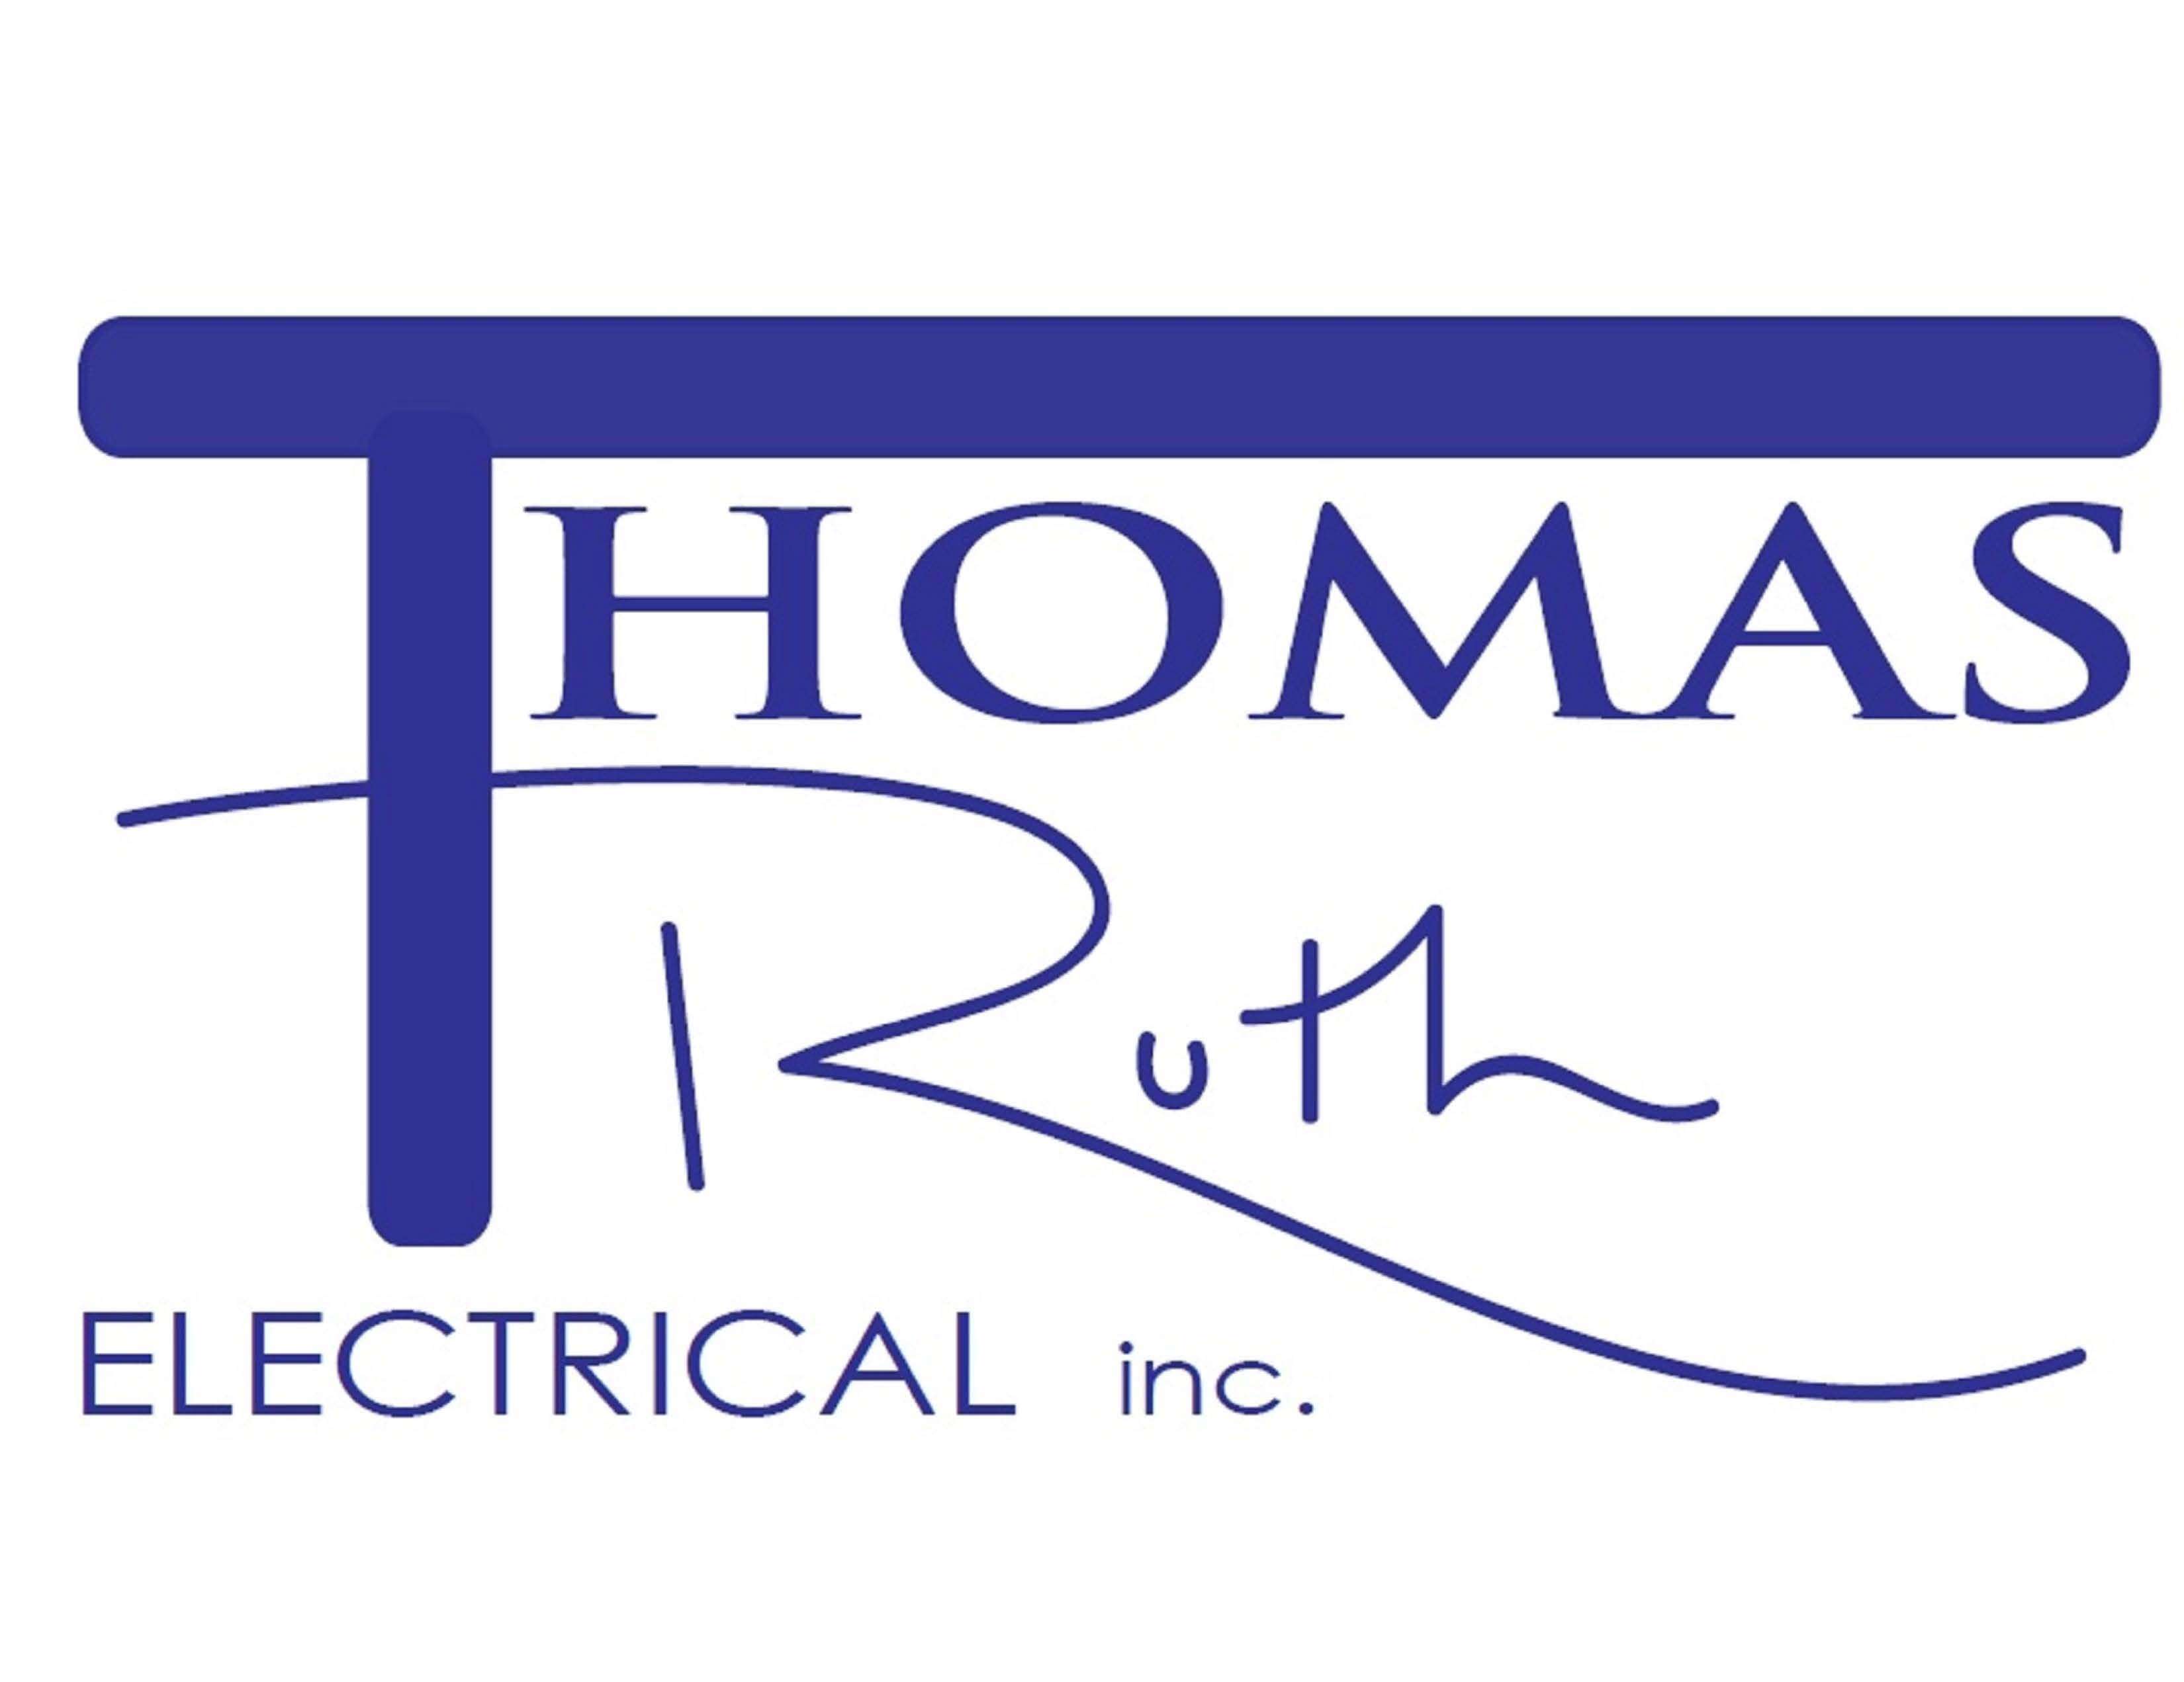 Thomas Ruth Electric